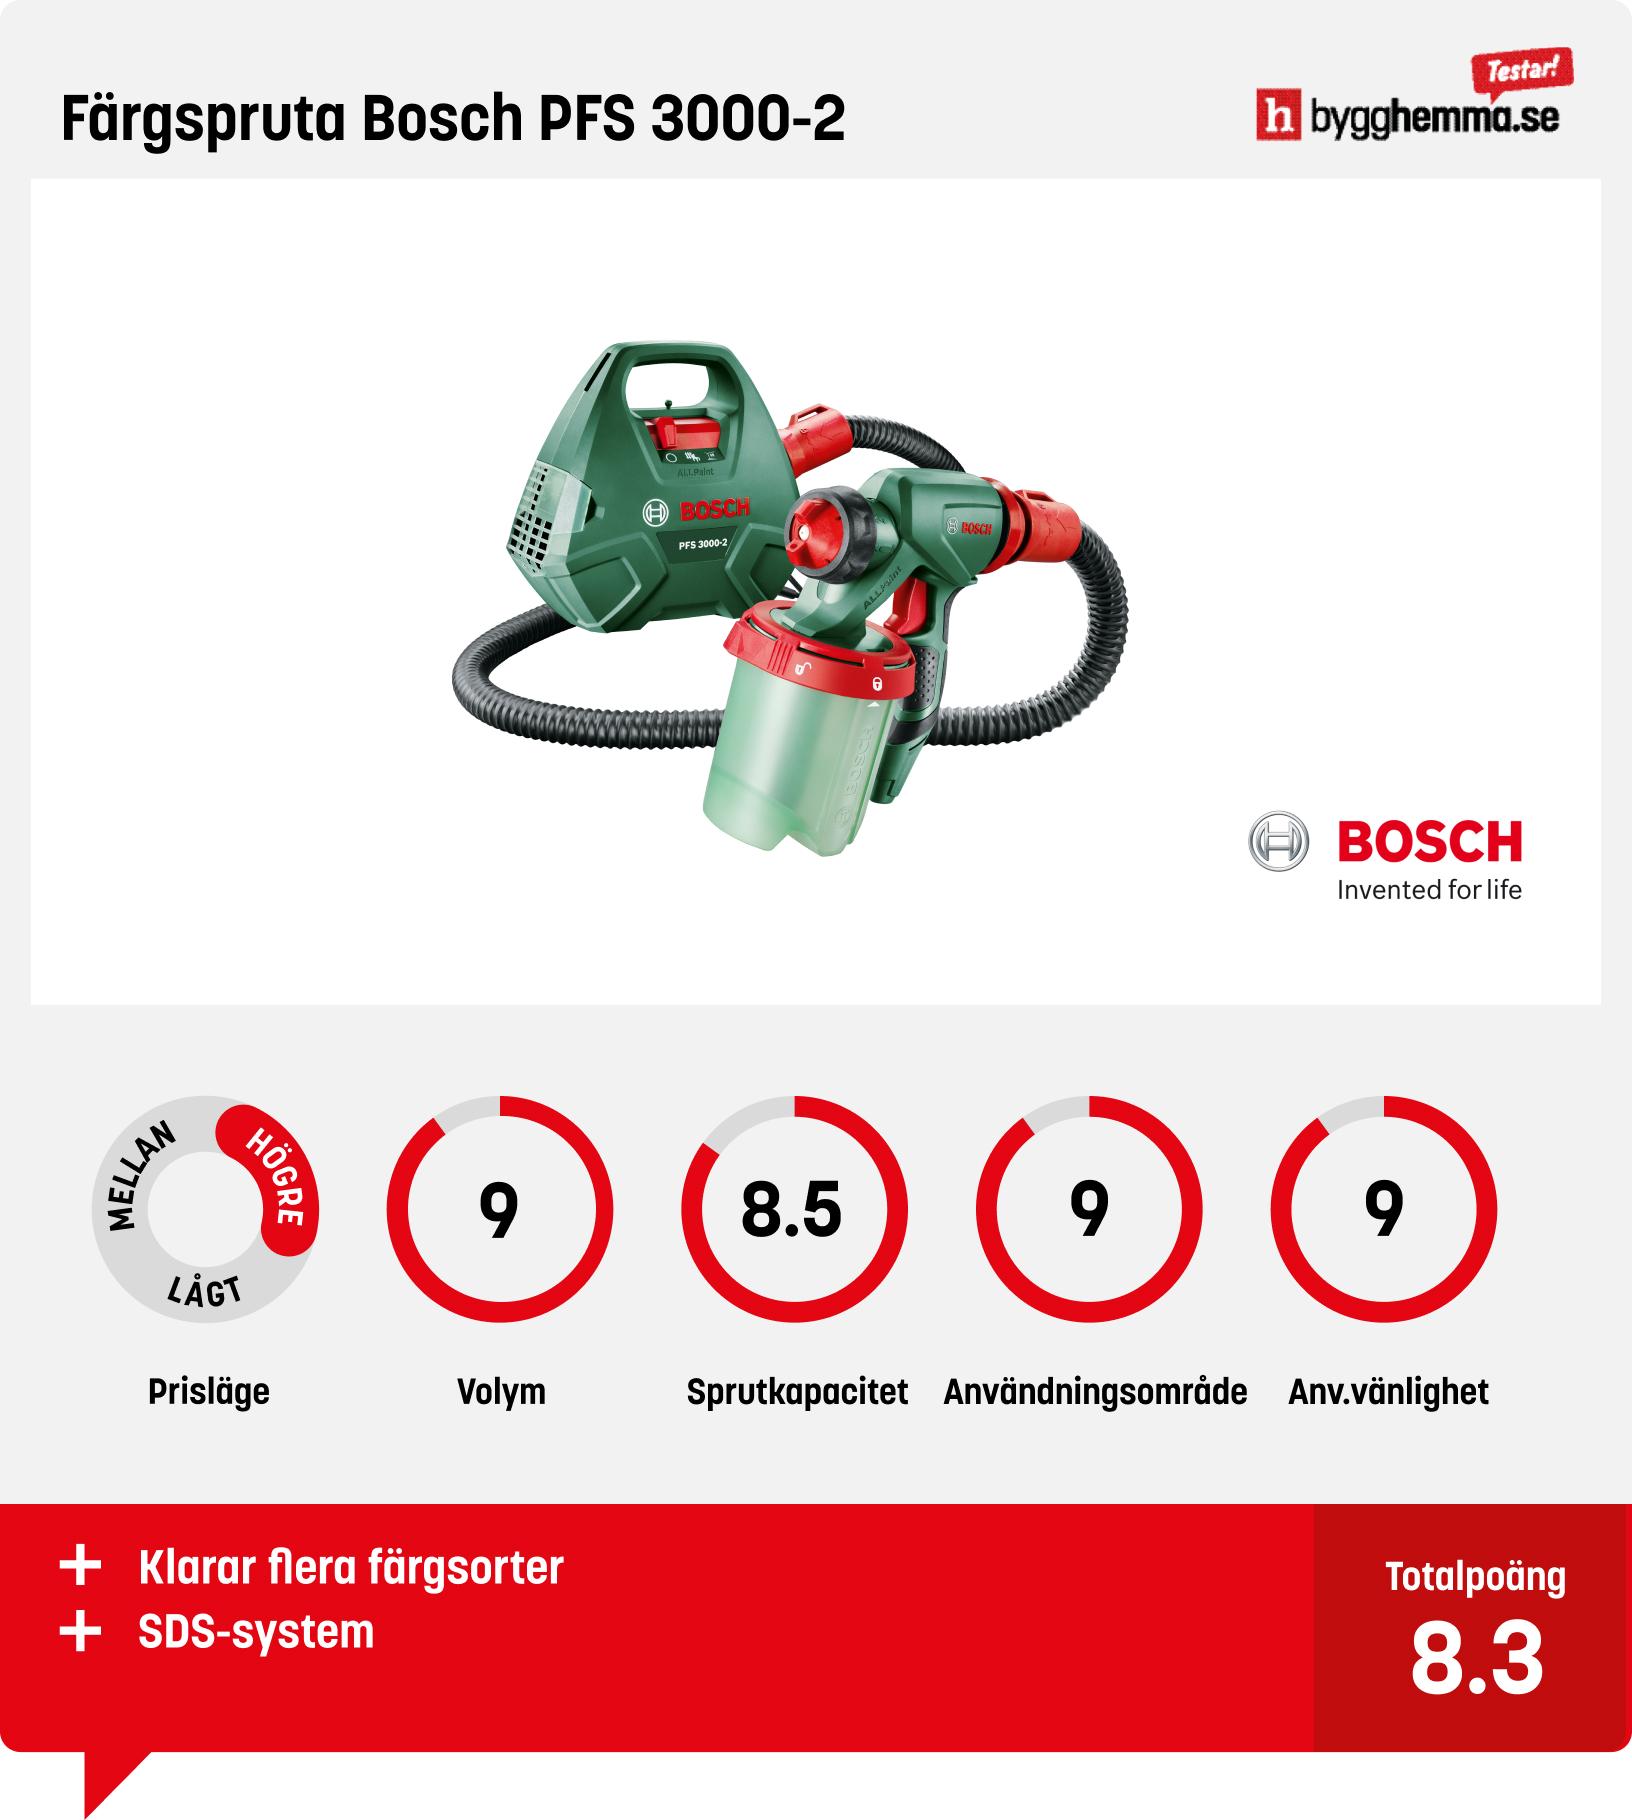 Färgspruta test - Färgspruta Bosch PFS 3000-2